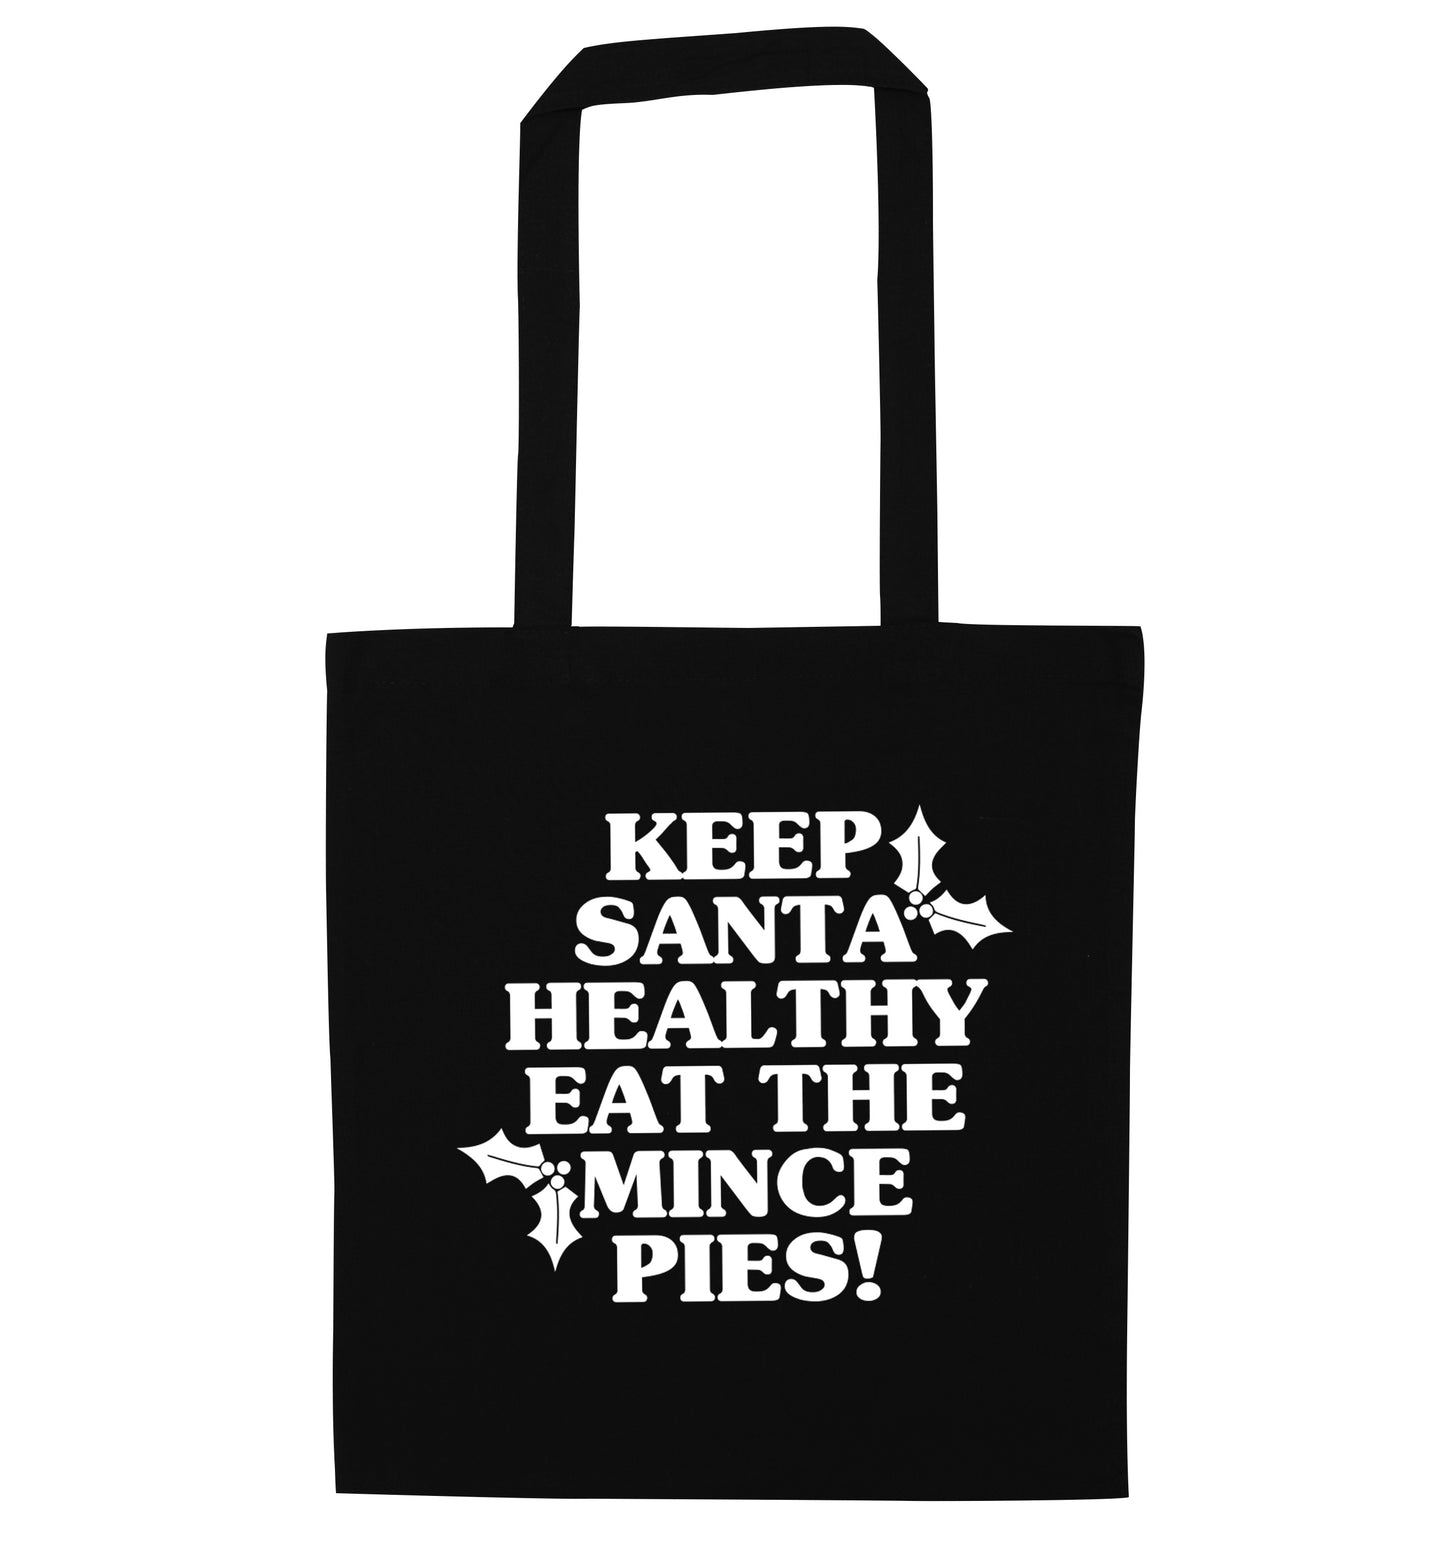 Keep santa healthy eat the mince pies black tote bag